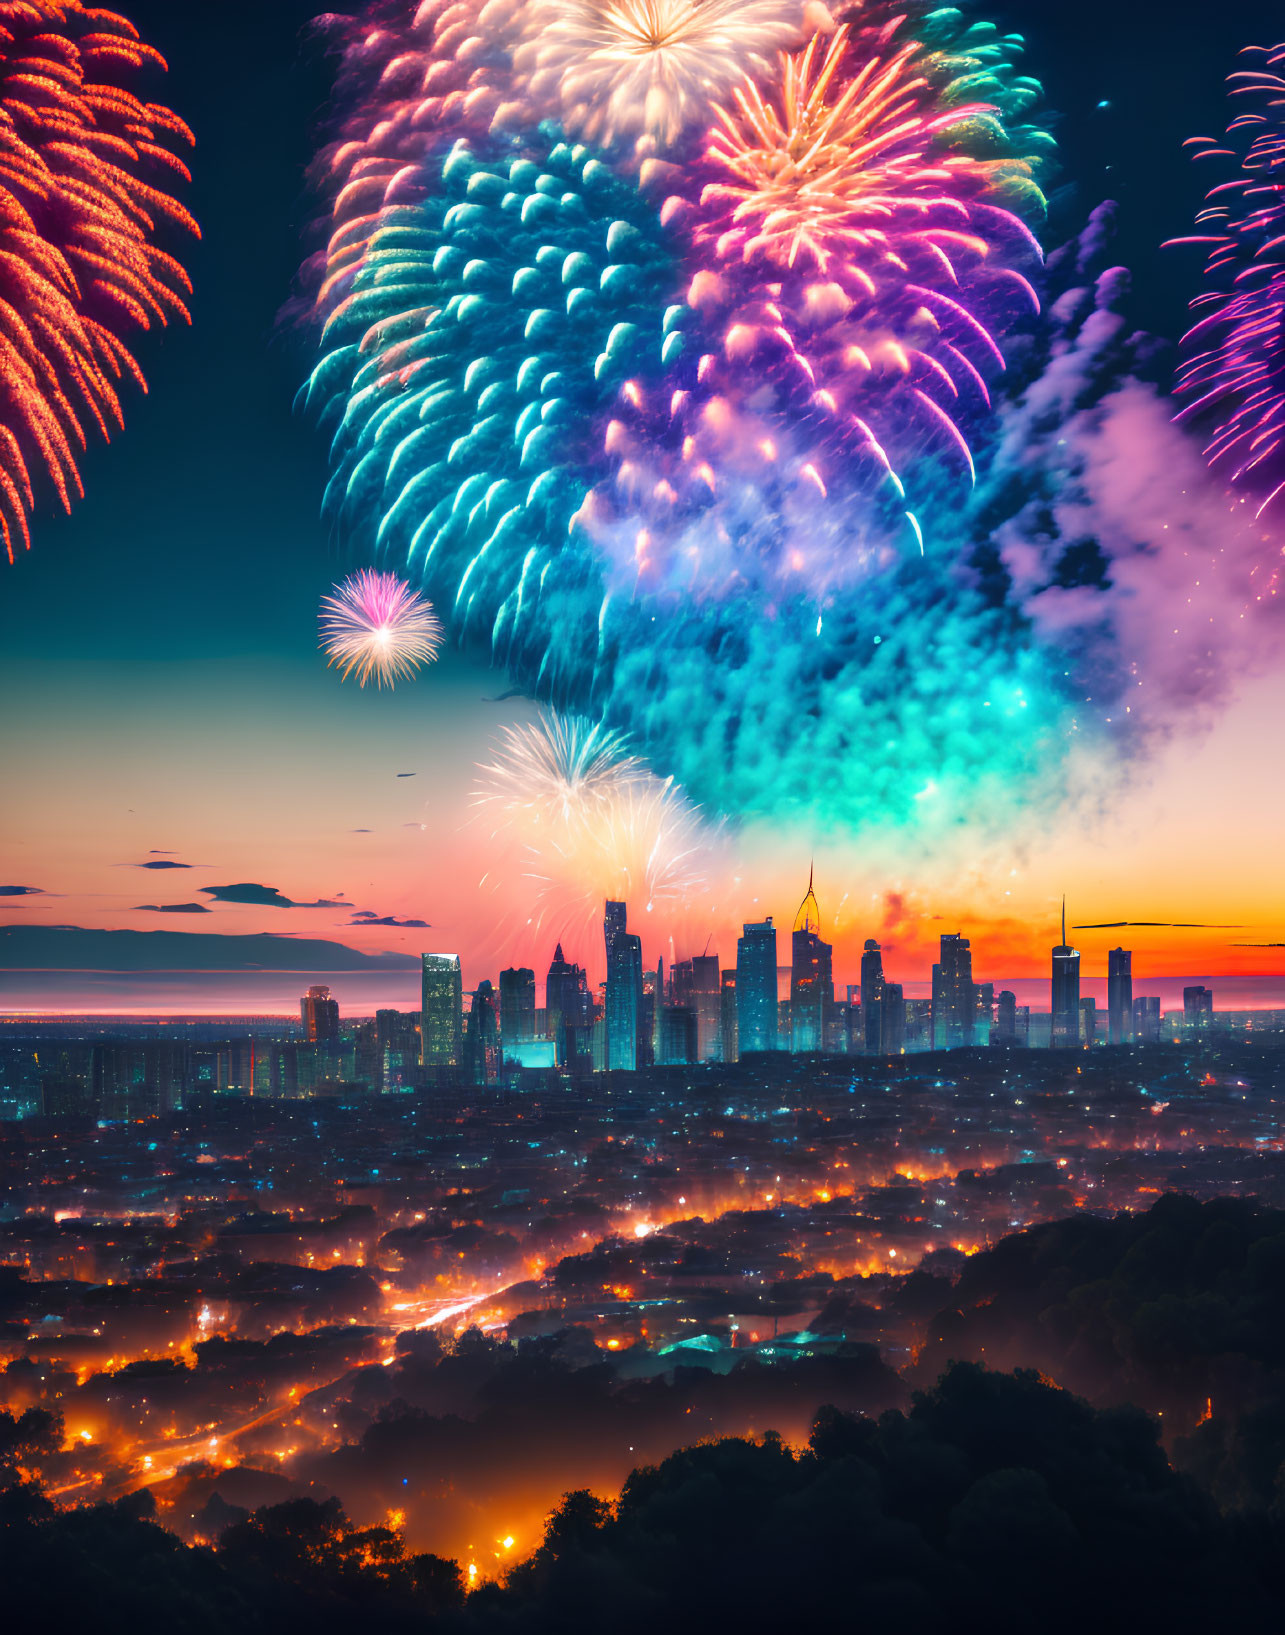 Colorful fireworks display over city skyline at dusk